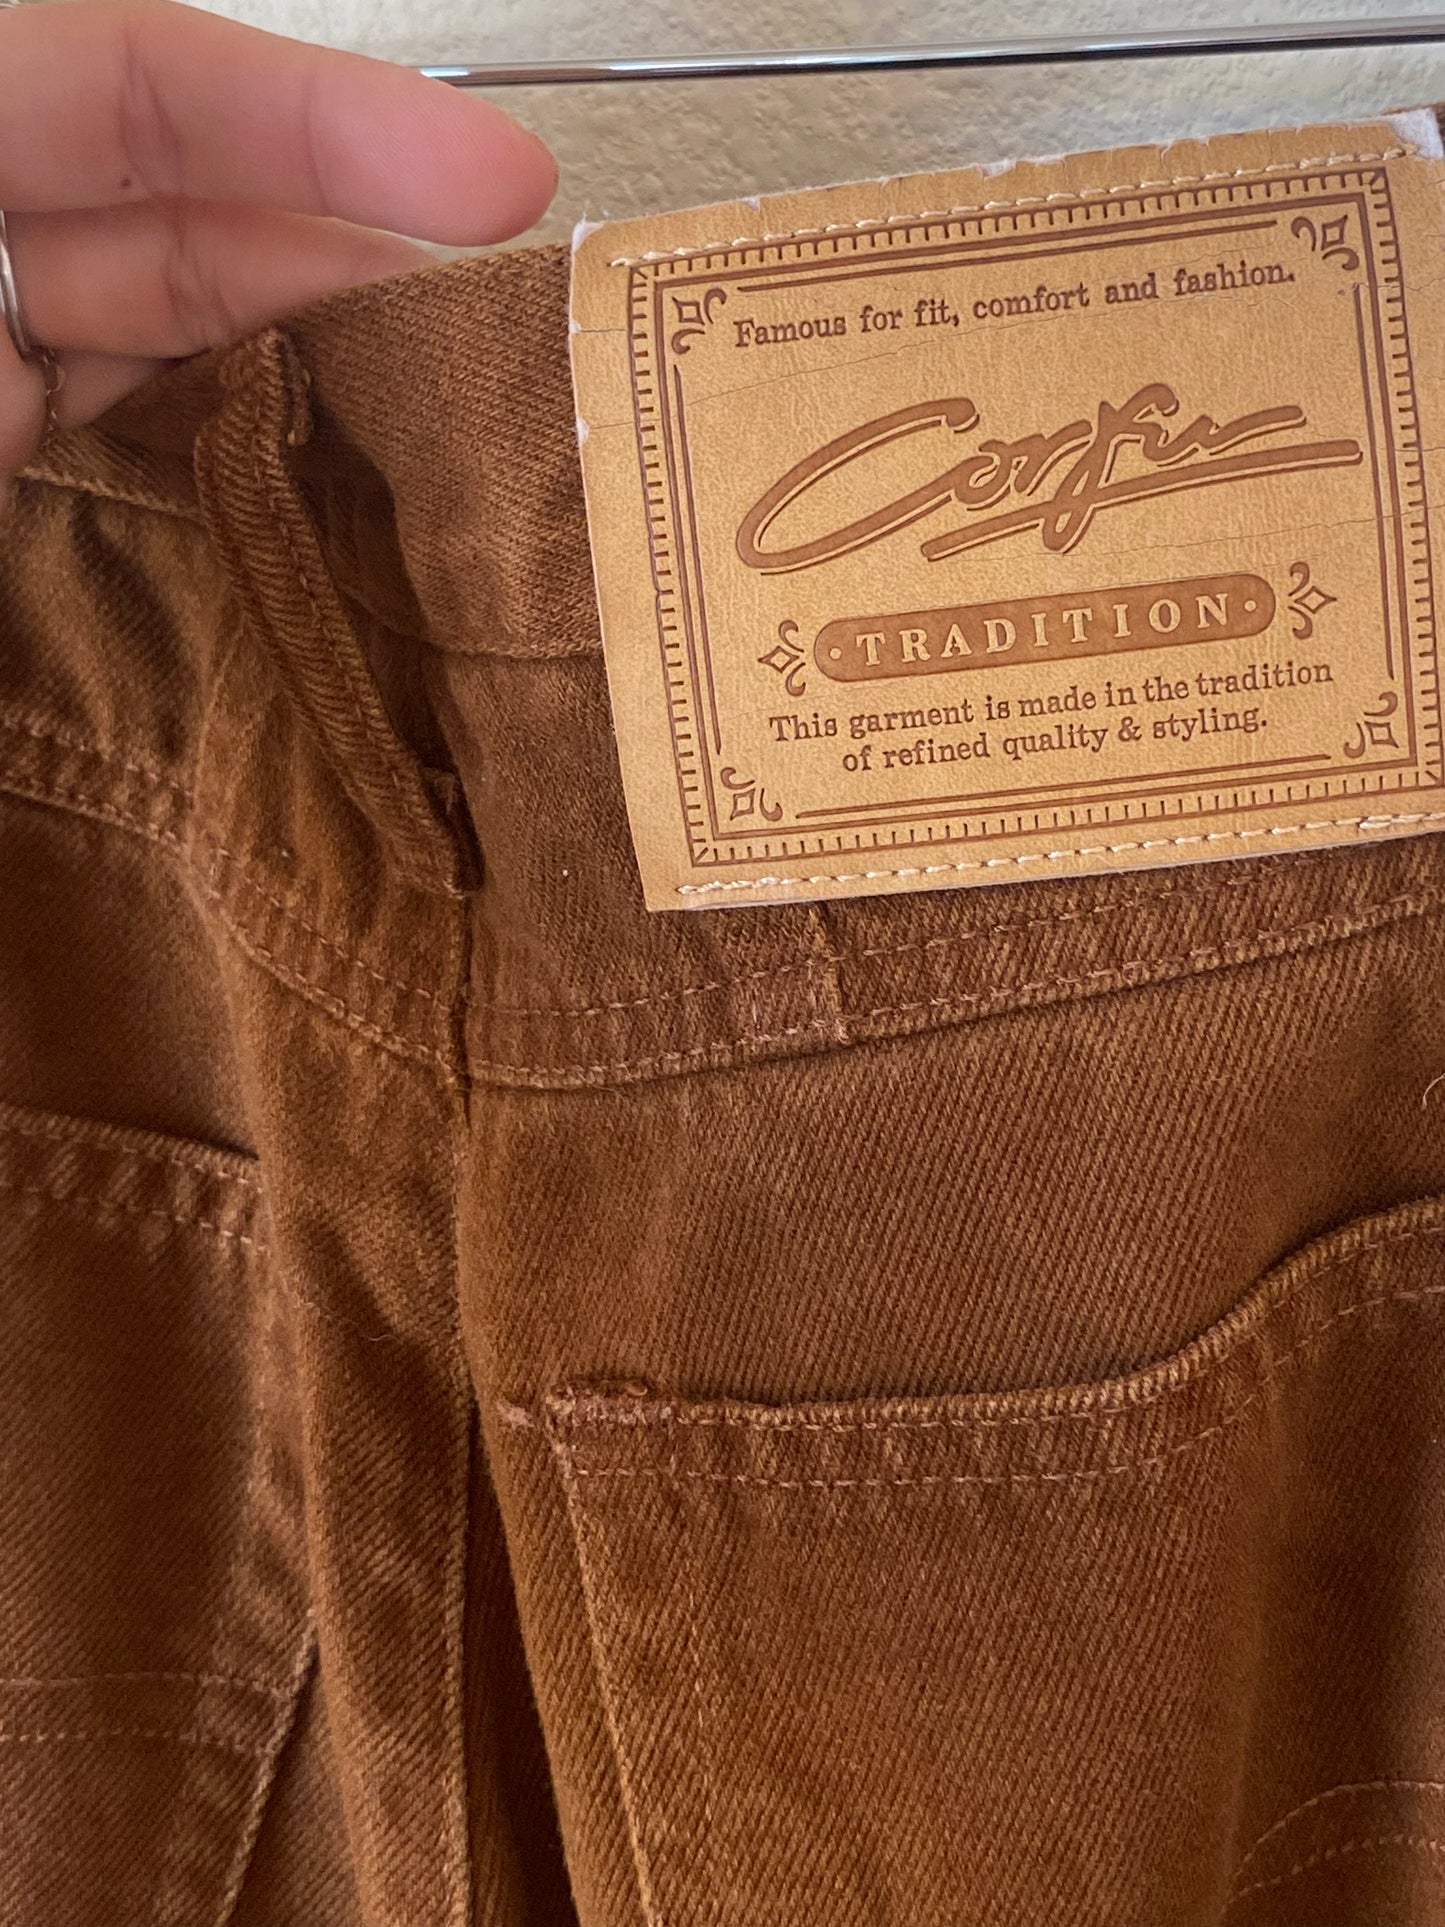 Corfu Burnt Orange Super High Waisted Corduroy Jeans SIZE 24